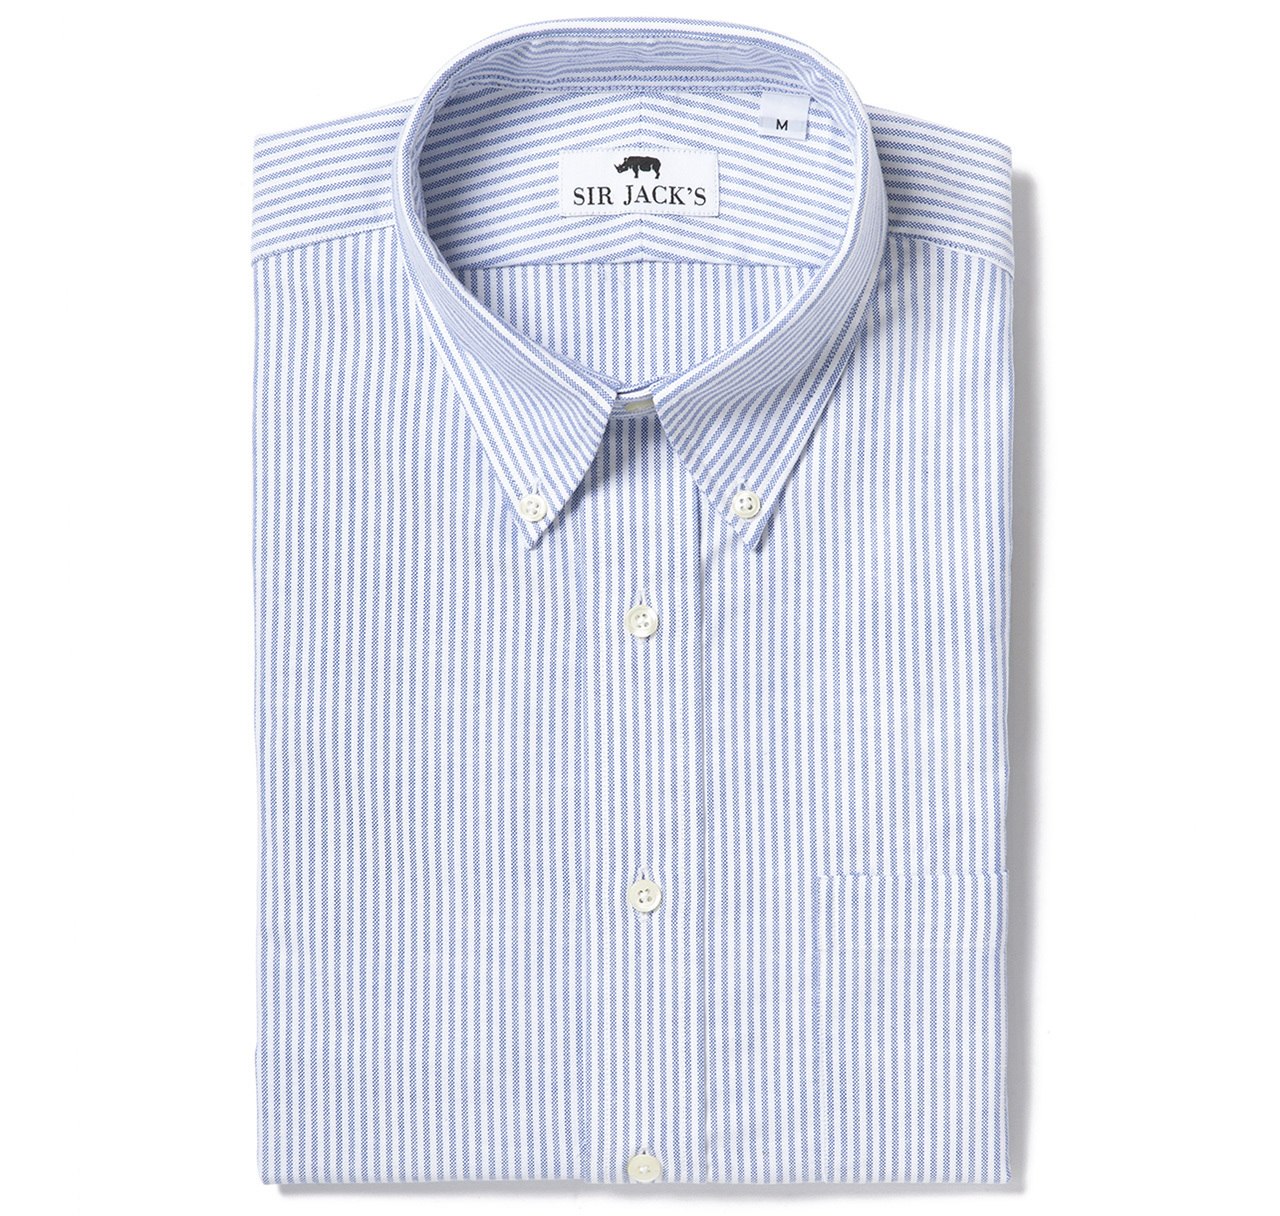 Sudbury Oxford Shirt in Blue & White Stripe